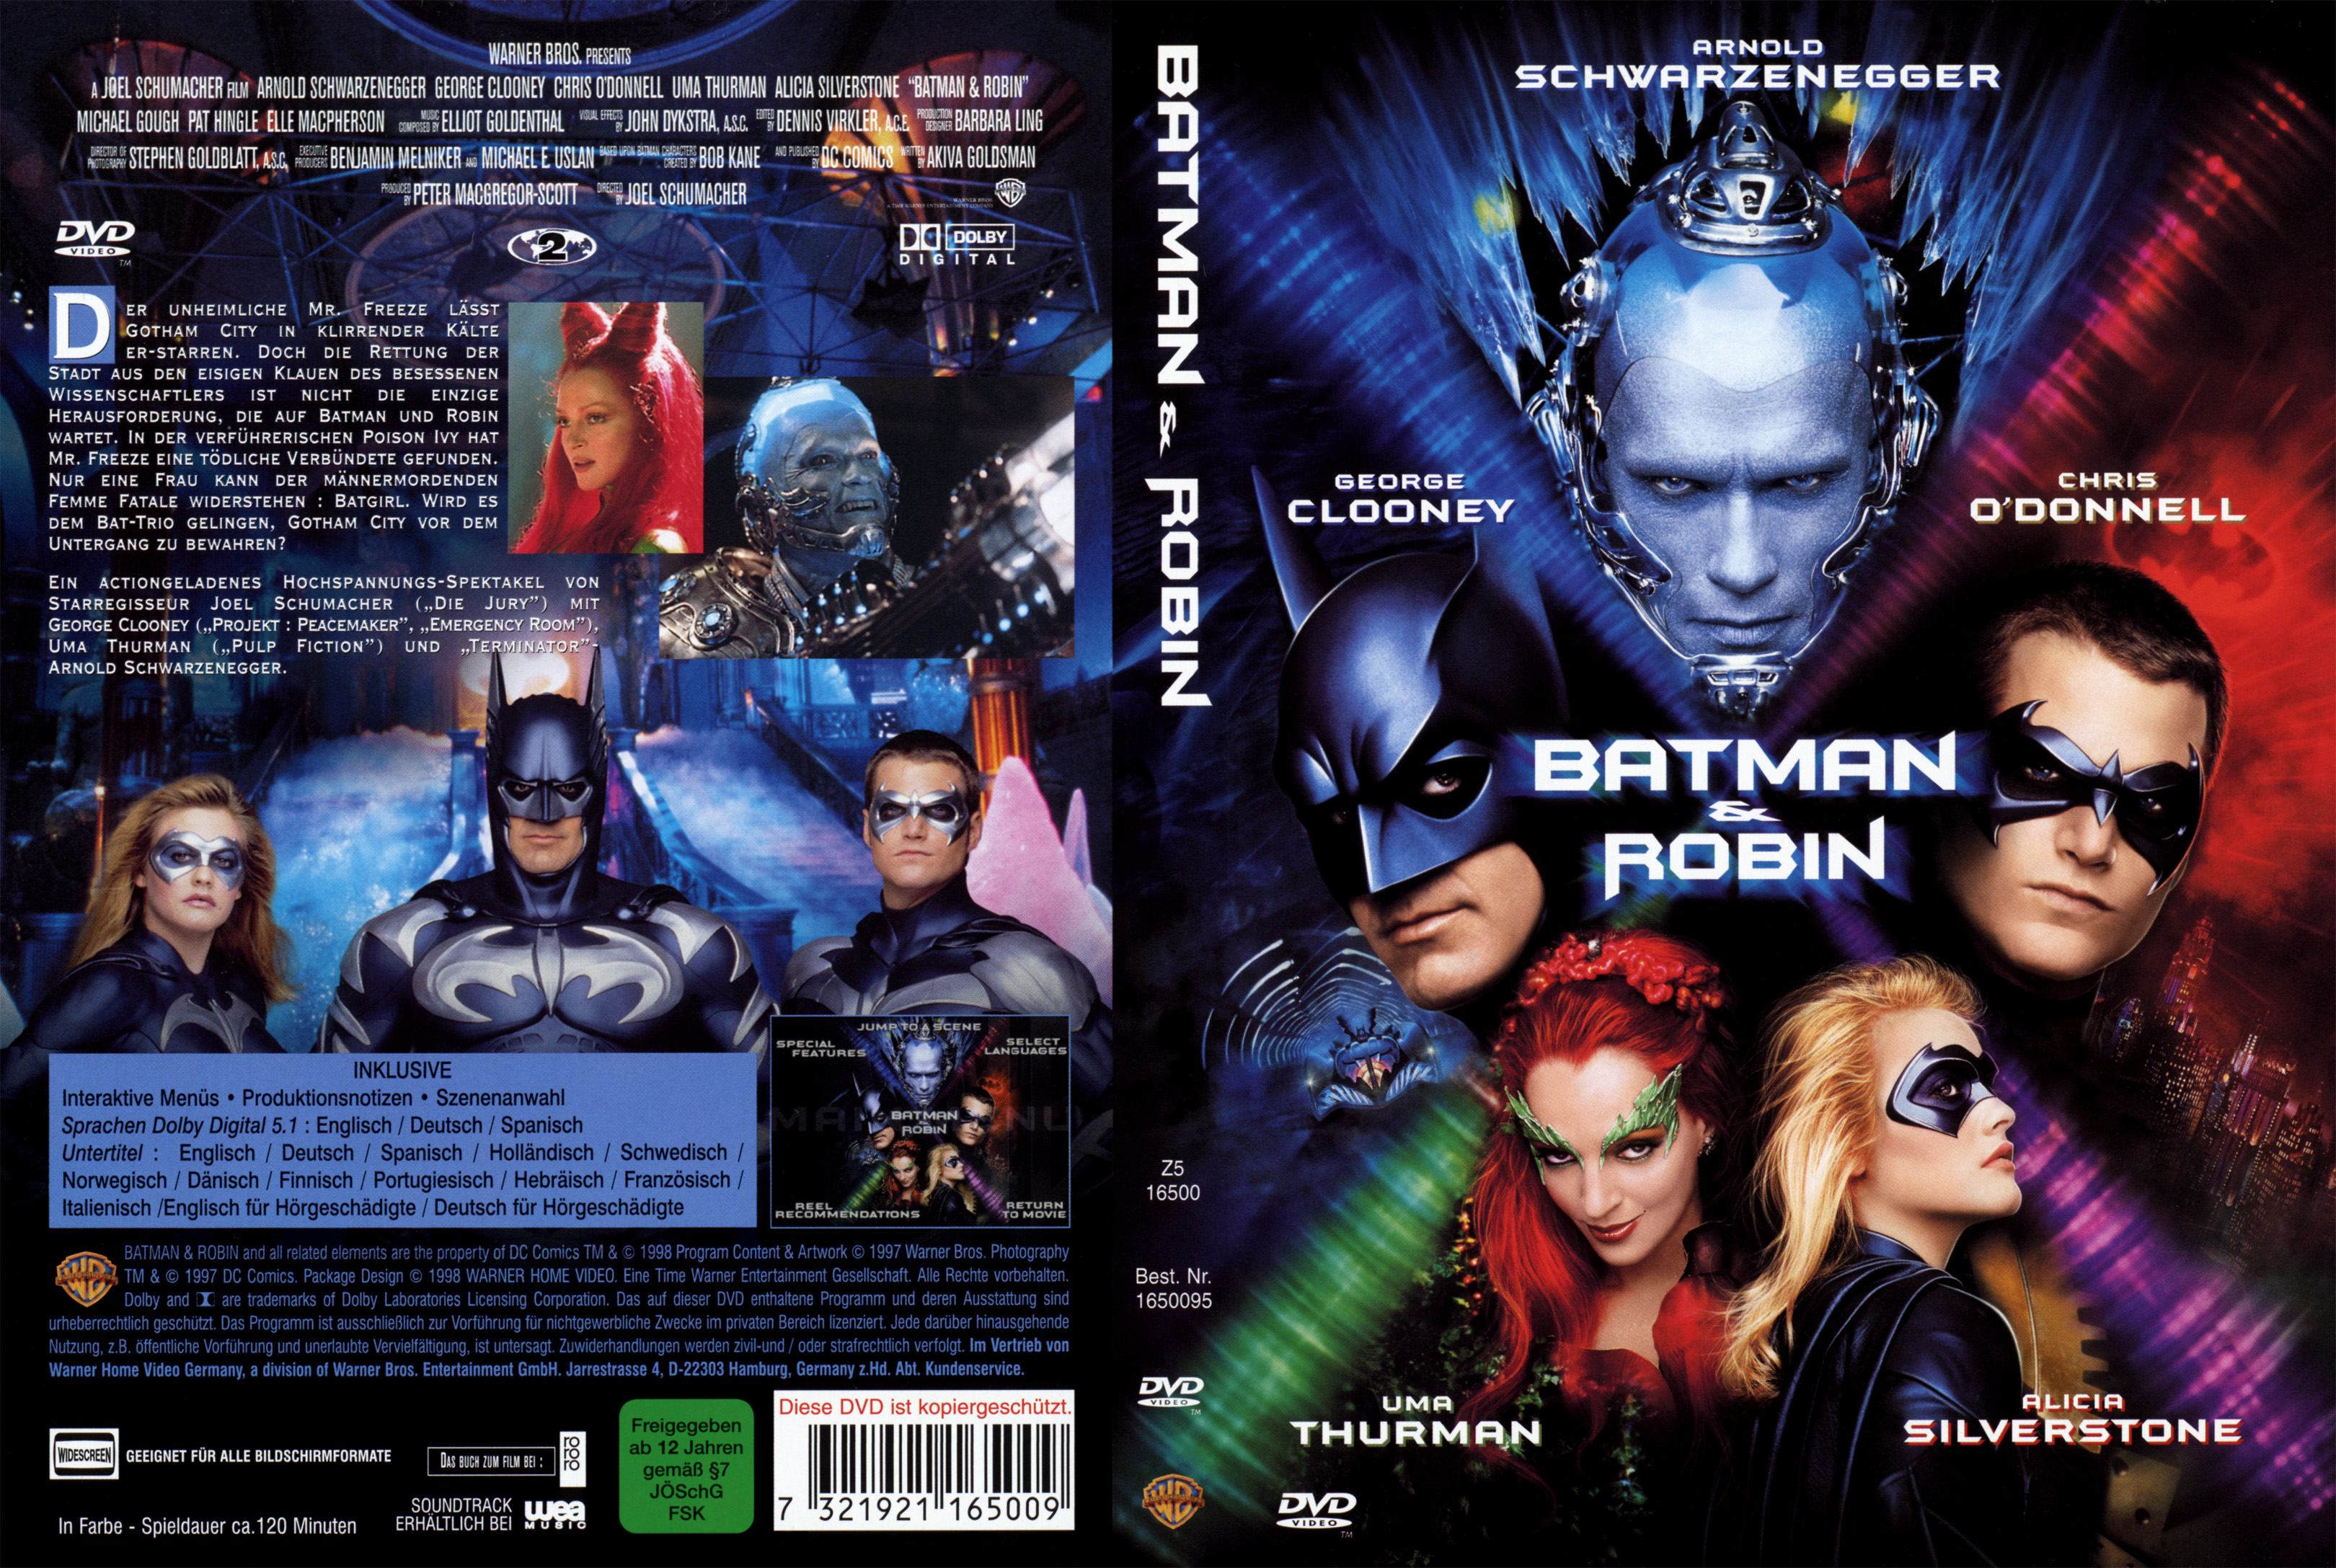 Batman and Robin DVD-Cover deutsch | German DVD Covers